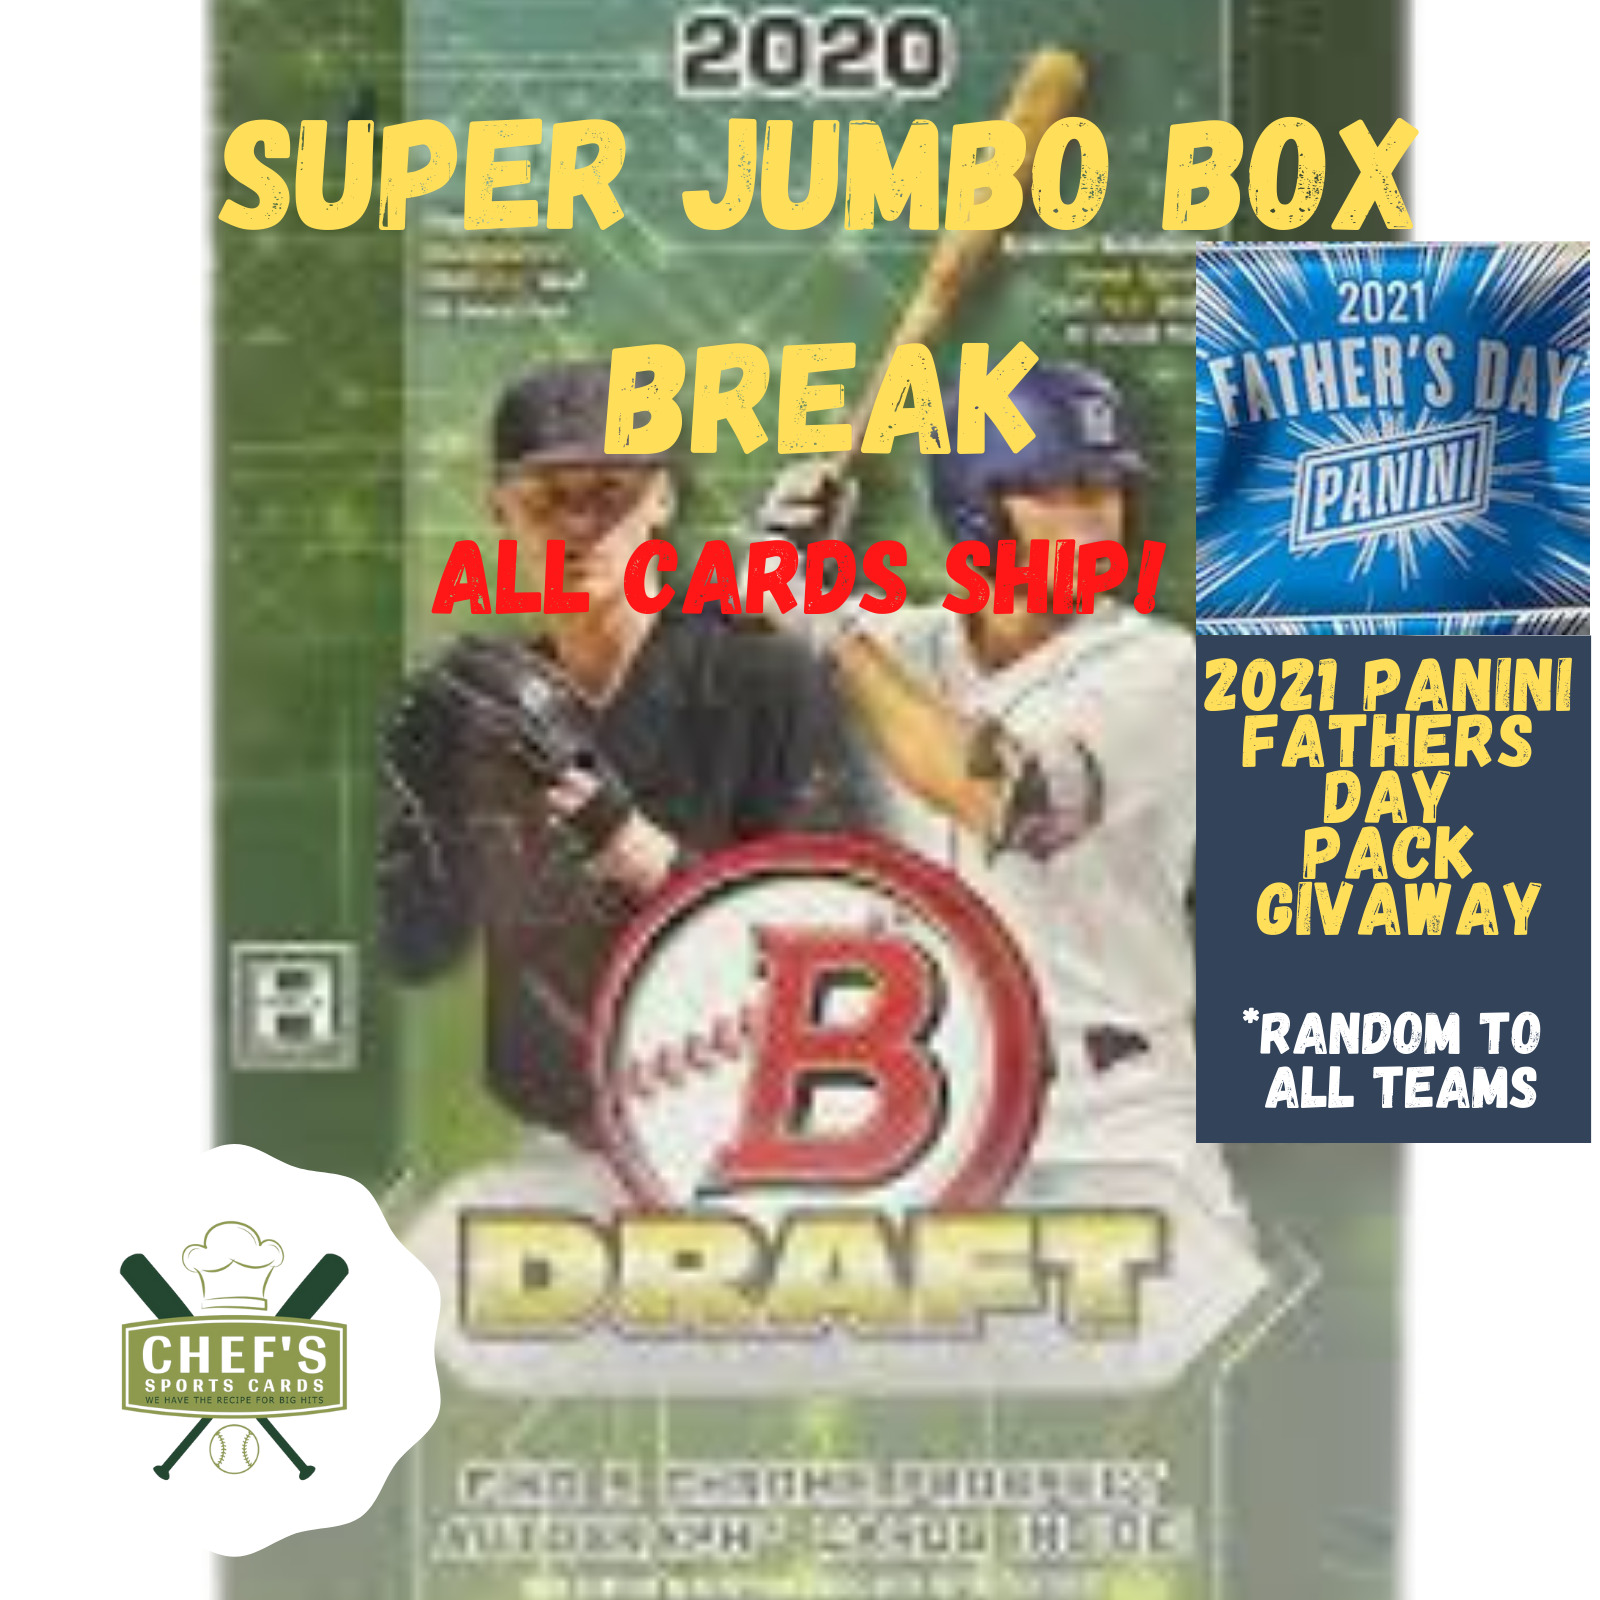 ST LOUIS CARDINALS - 2020 BOWMAN DRAFT SUPER JUMBO BOX (1/6 CASE) BREAK #21